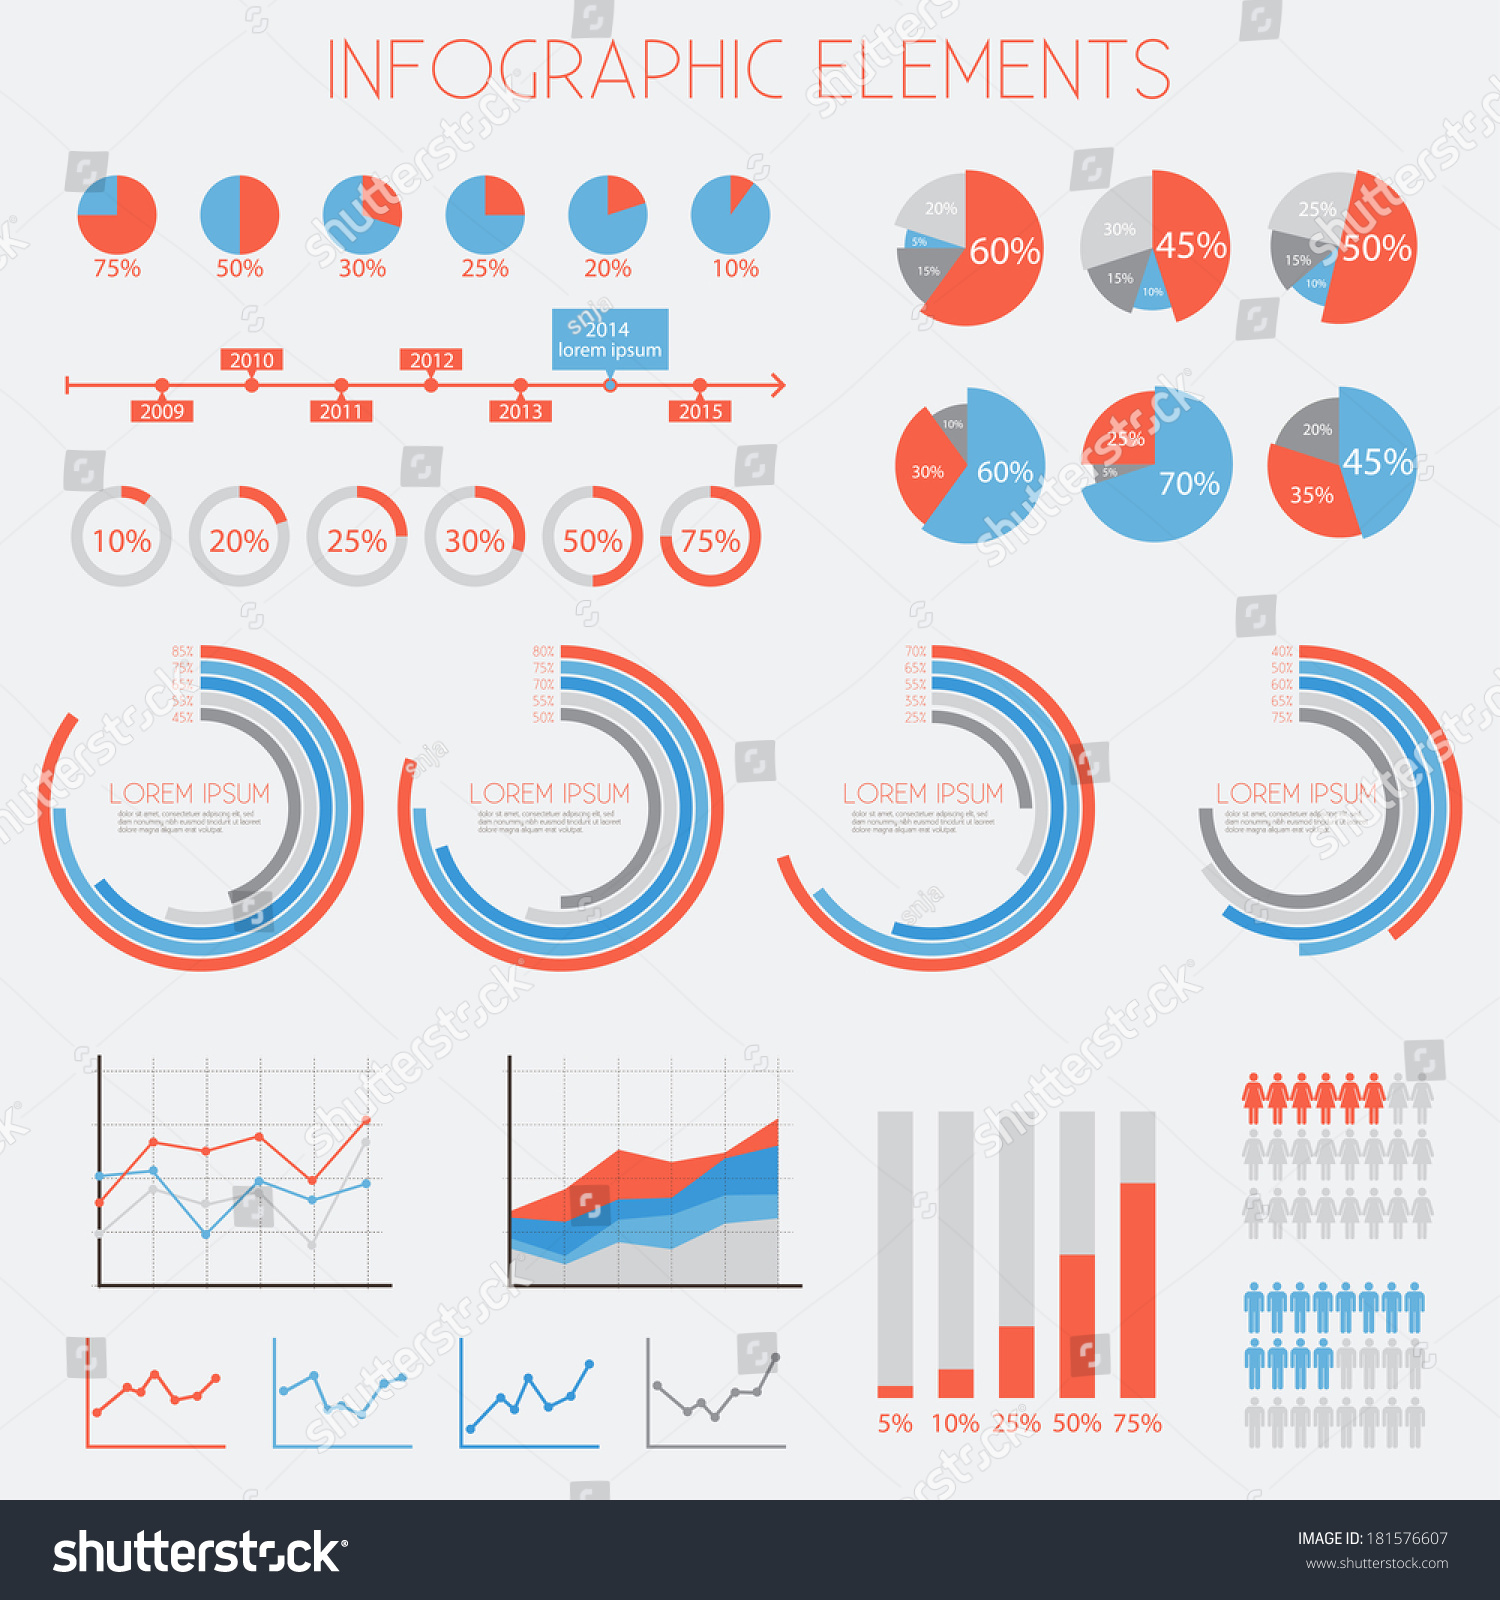 Data Analysis Charts And Graphs